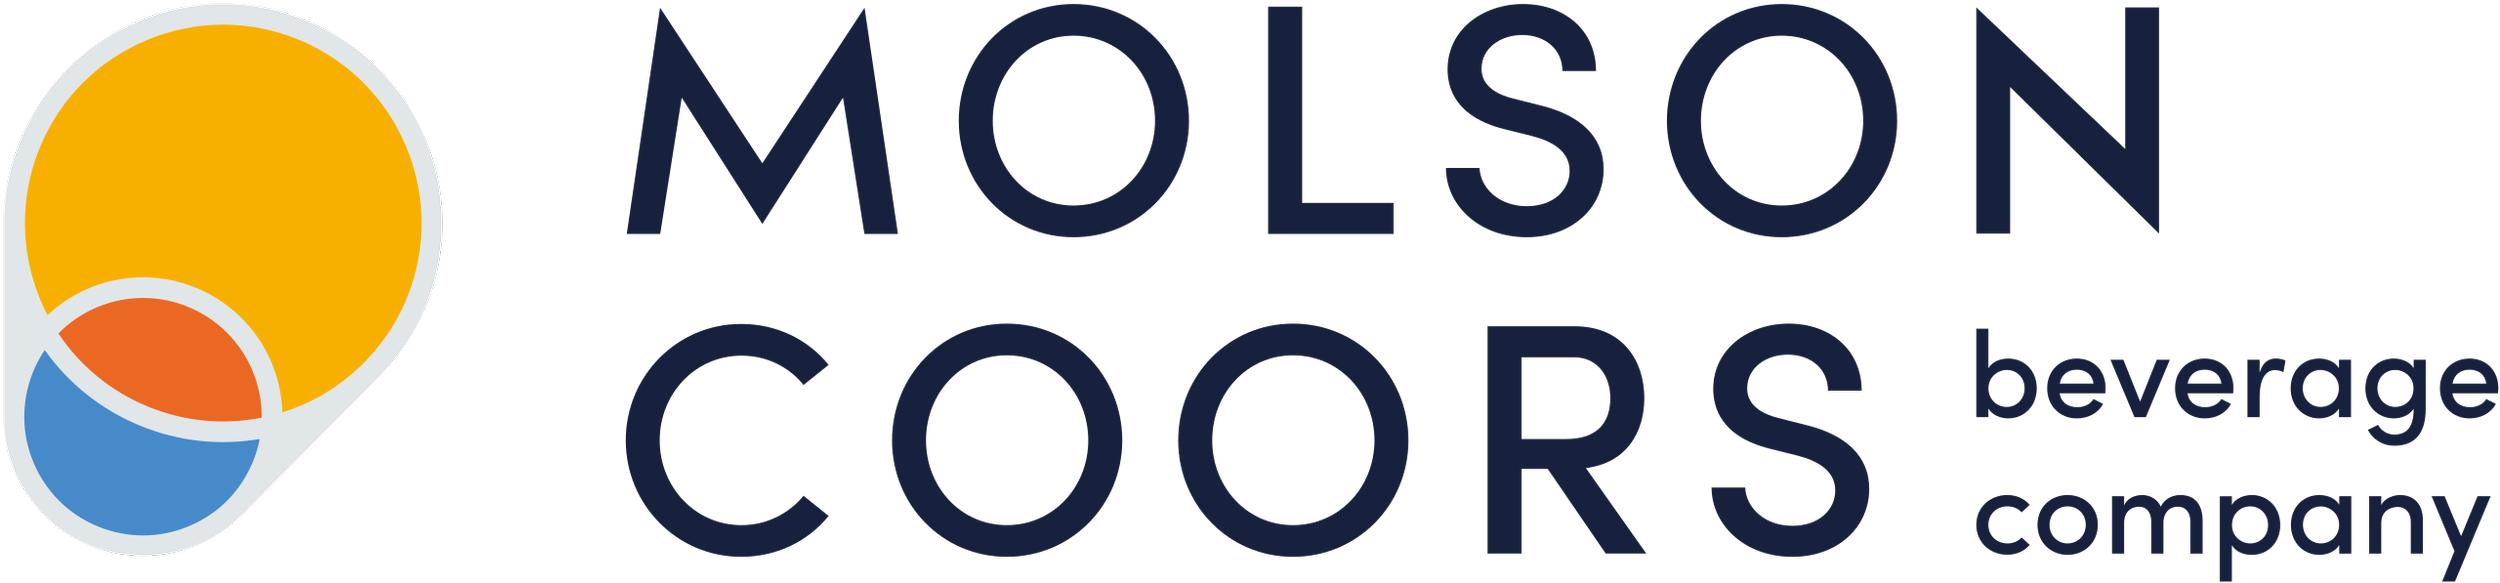 Molson_Coors_Beverage_Company_logo.svg.png